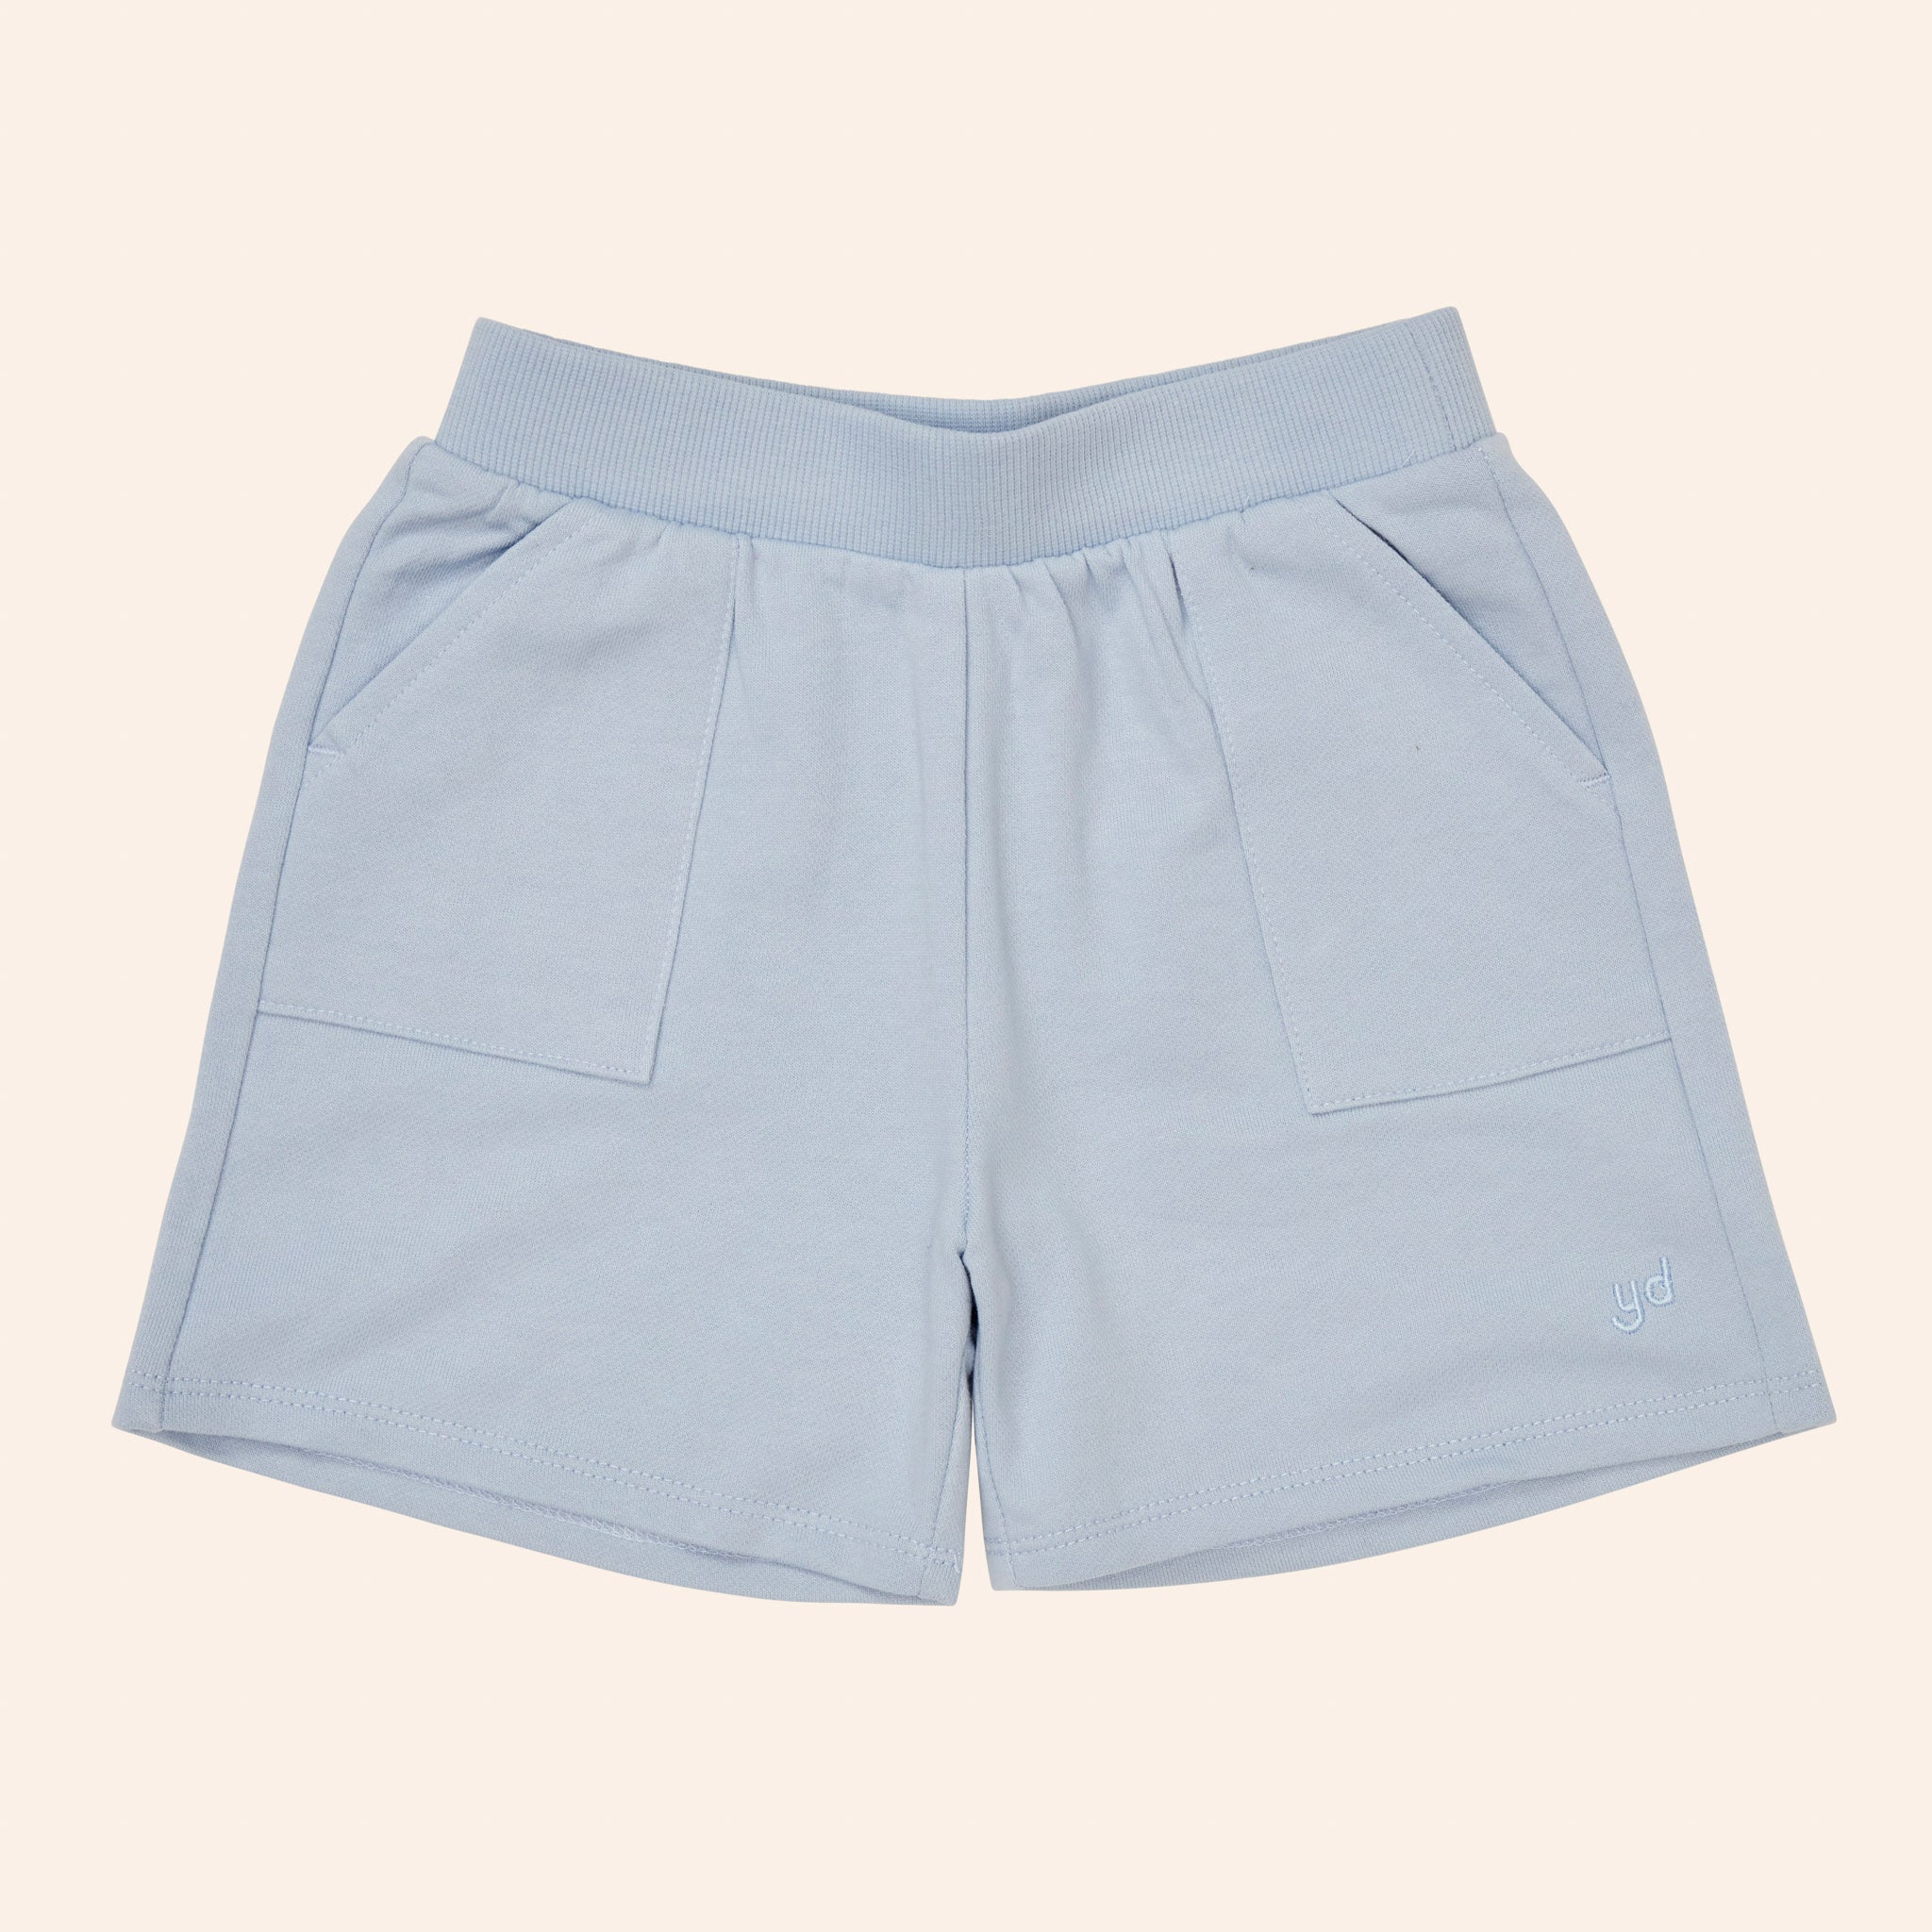 Maui Shorts (Subdued Blue)